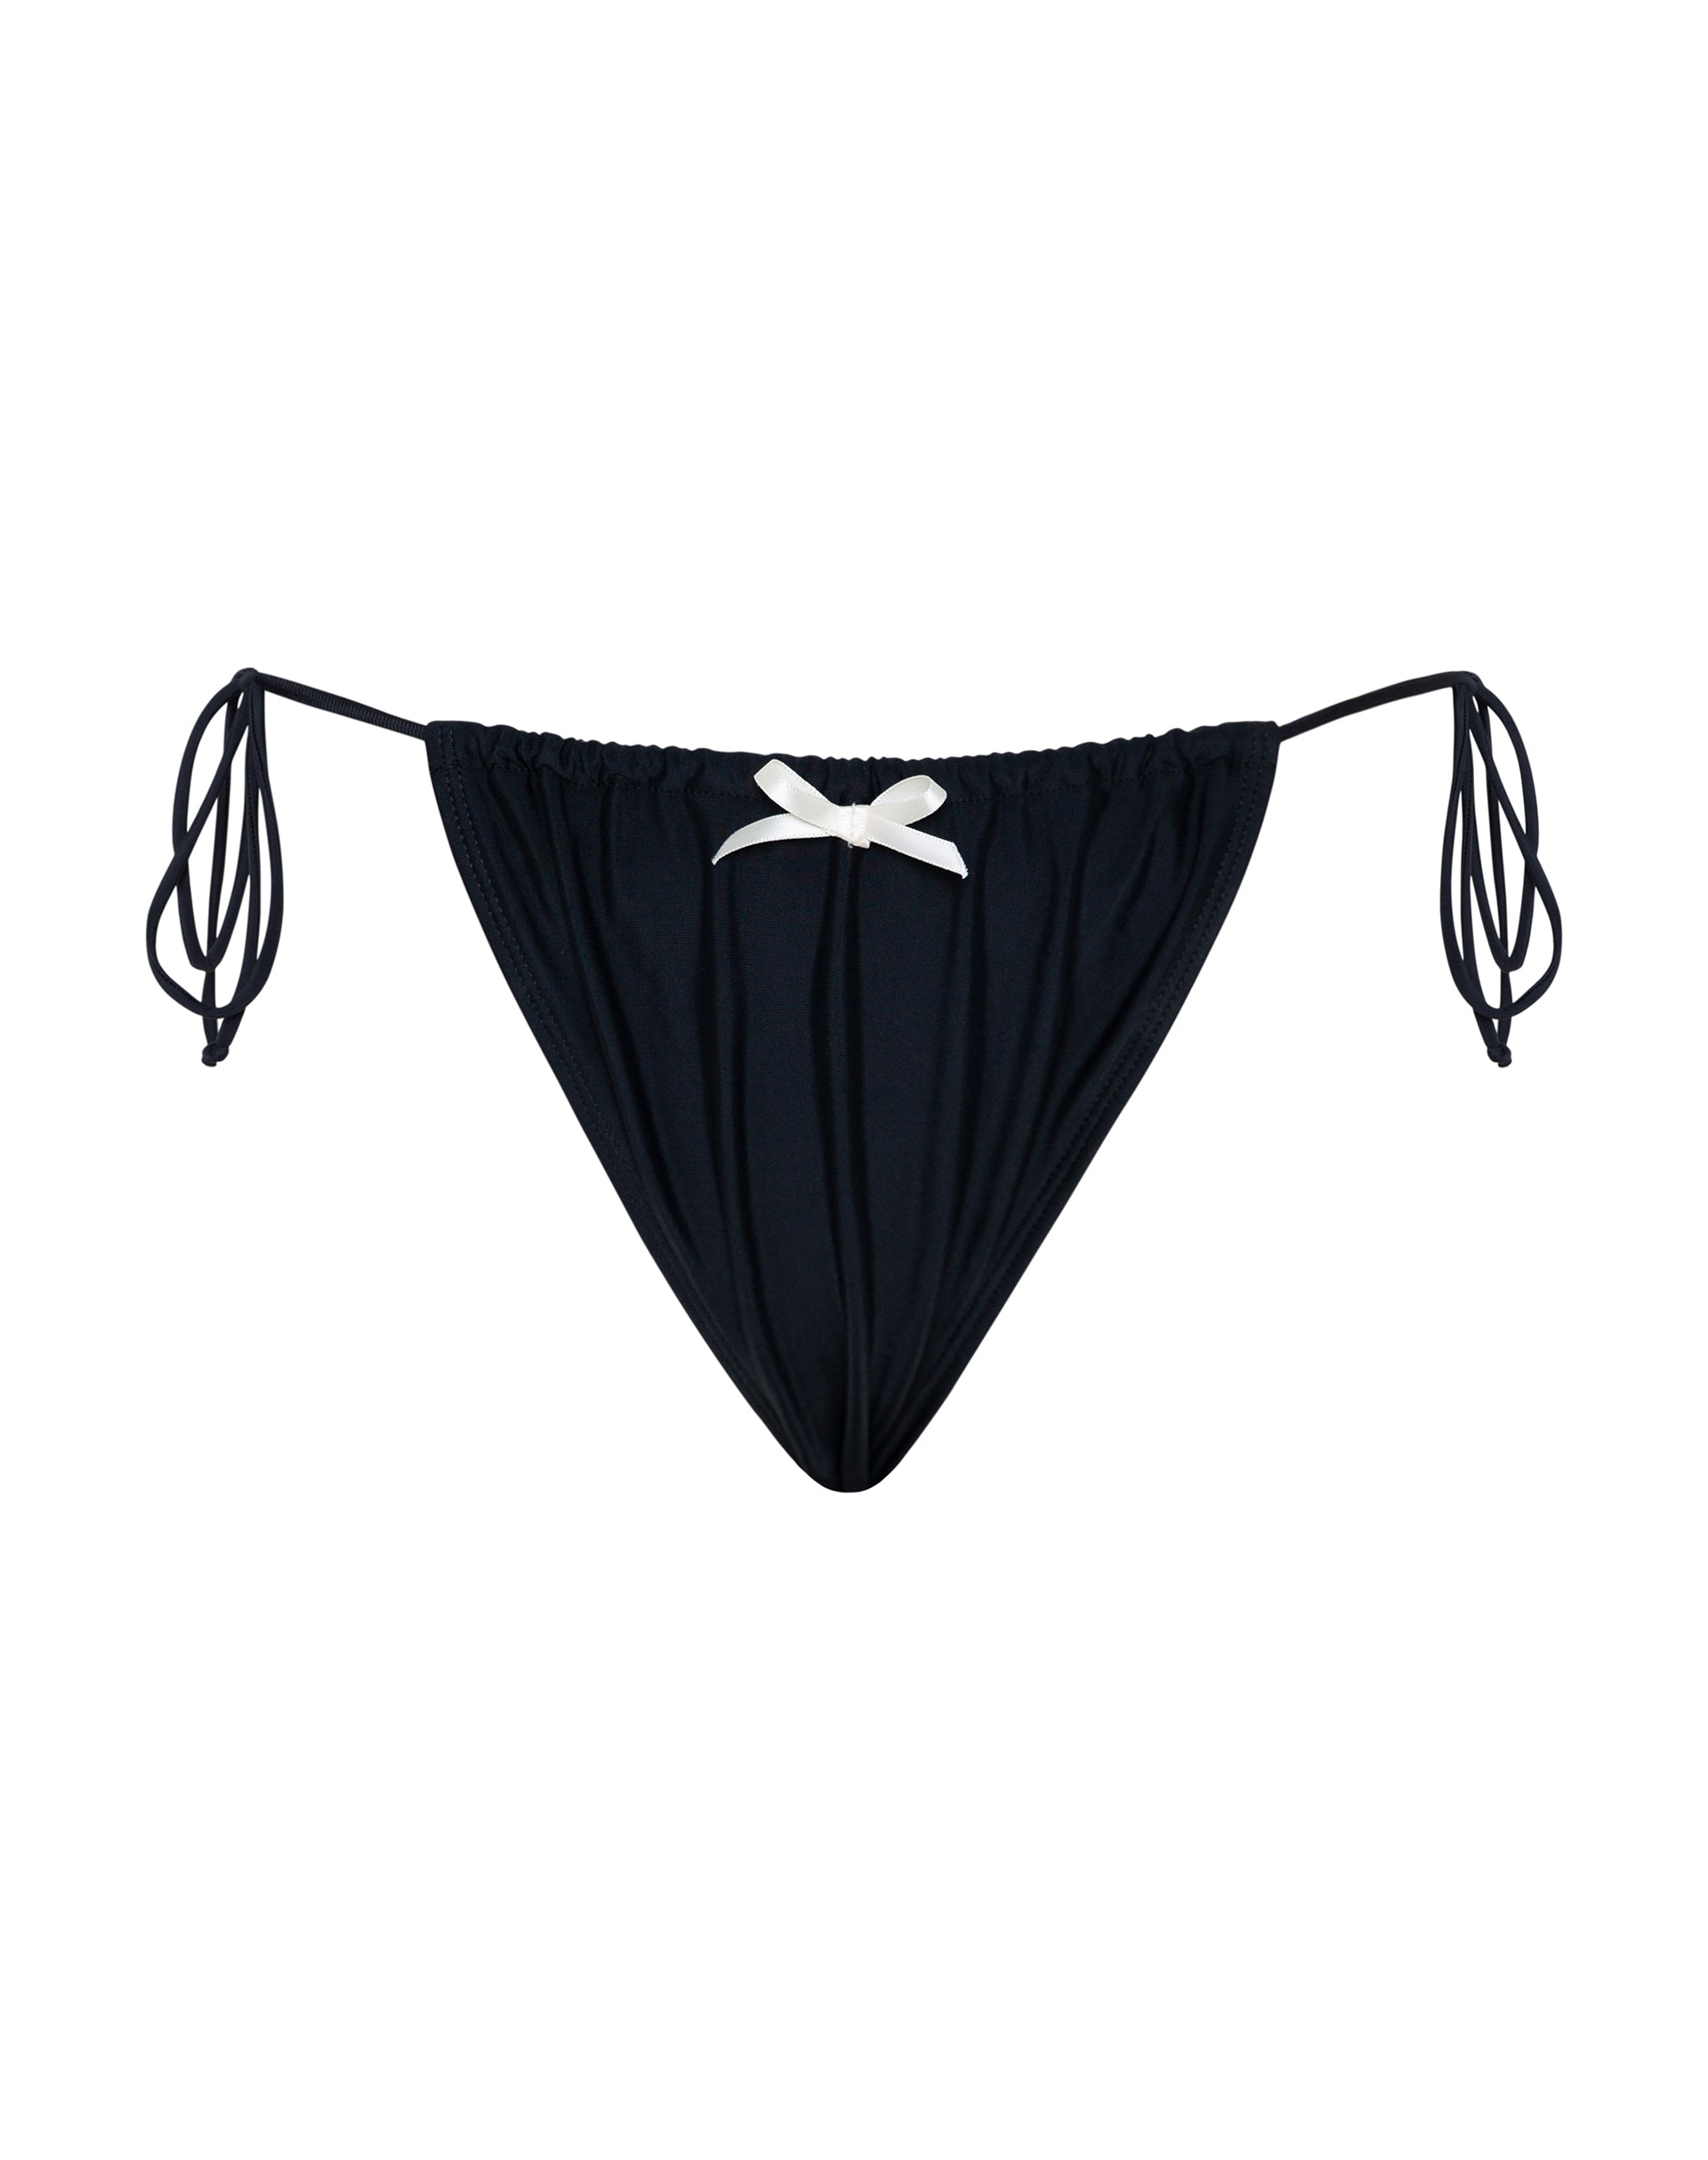 Image of Leyna Bikini Bottom in Black with Ivory Bow